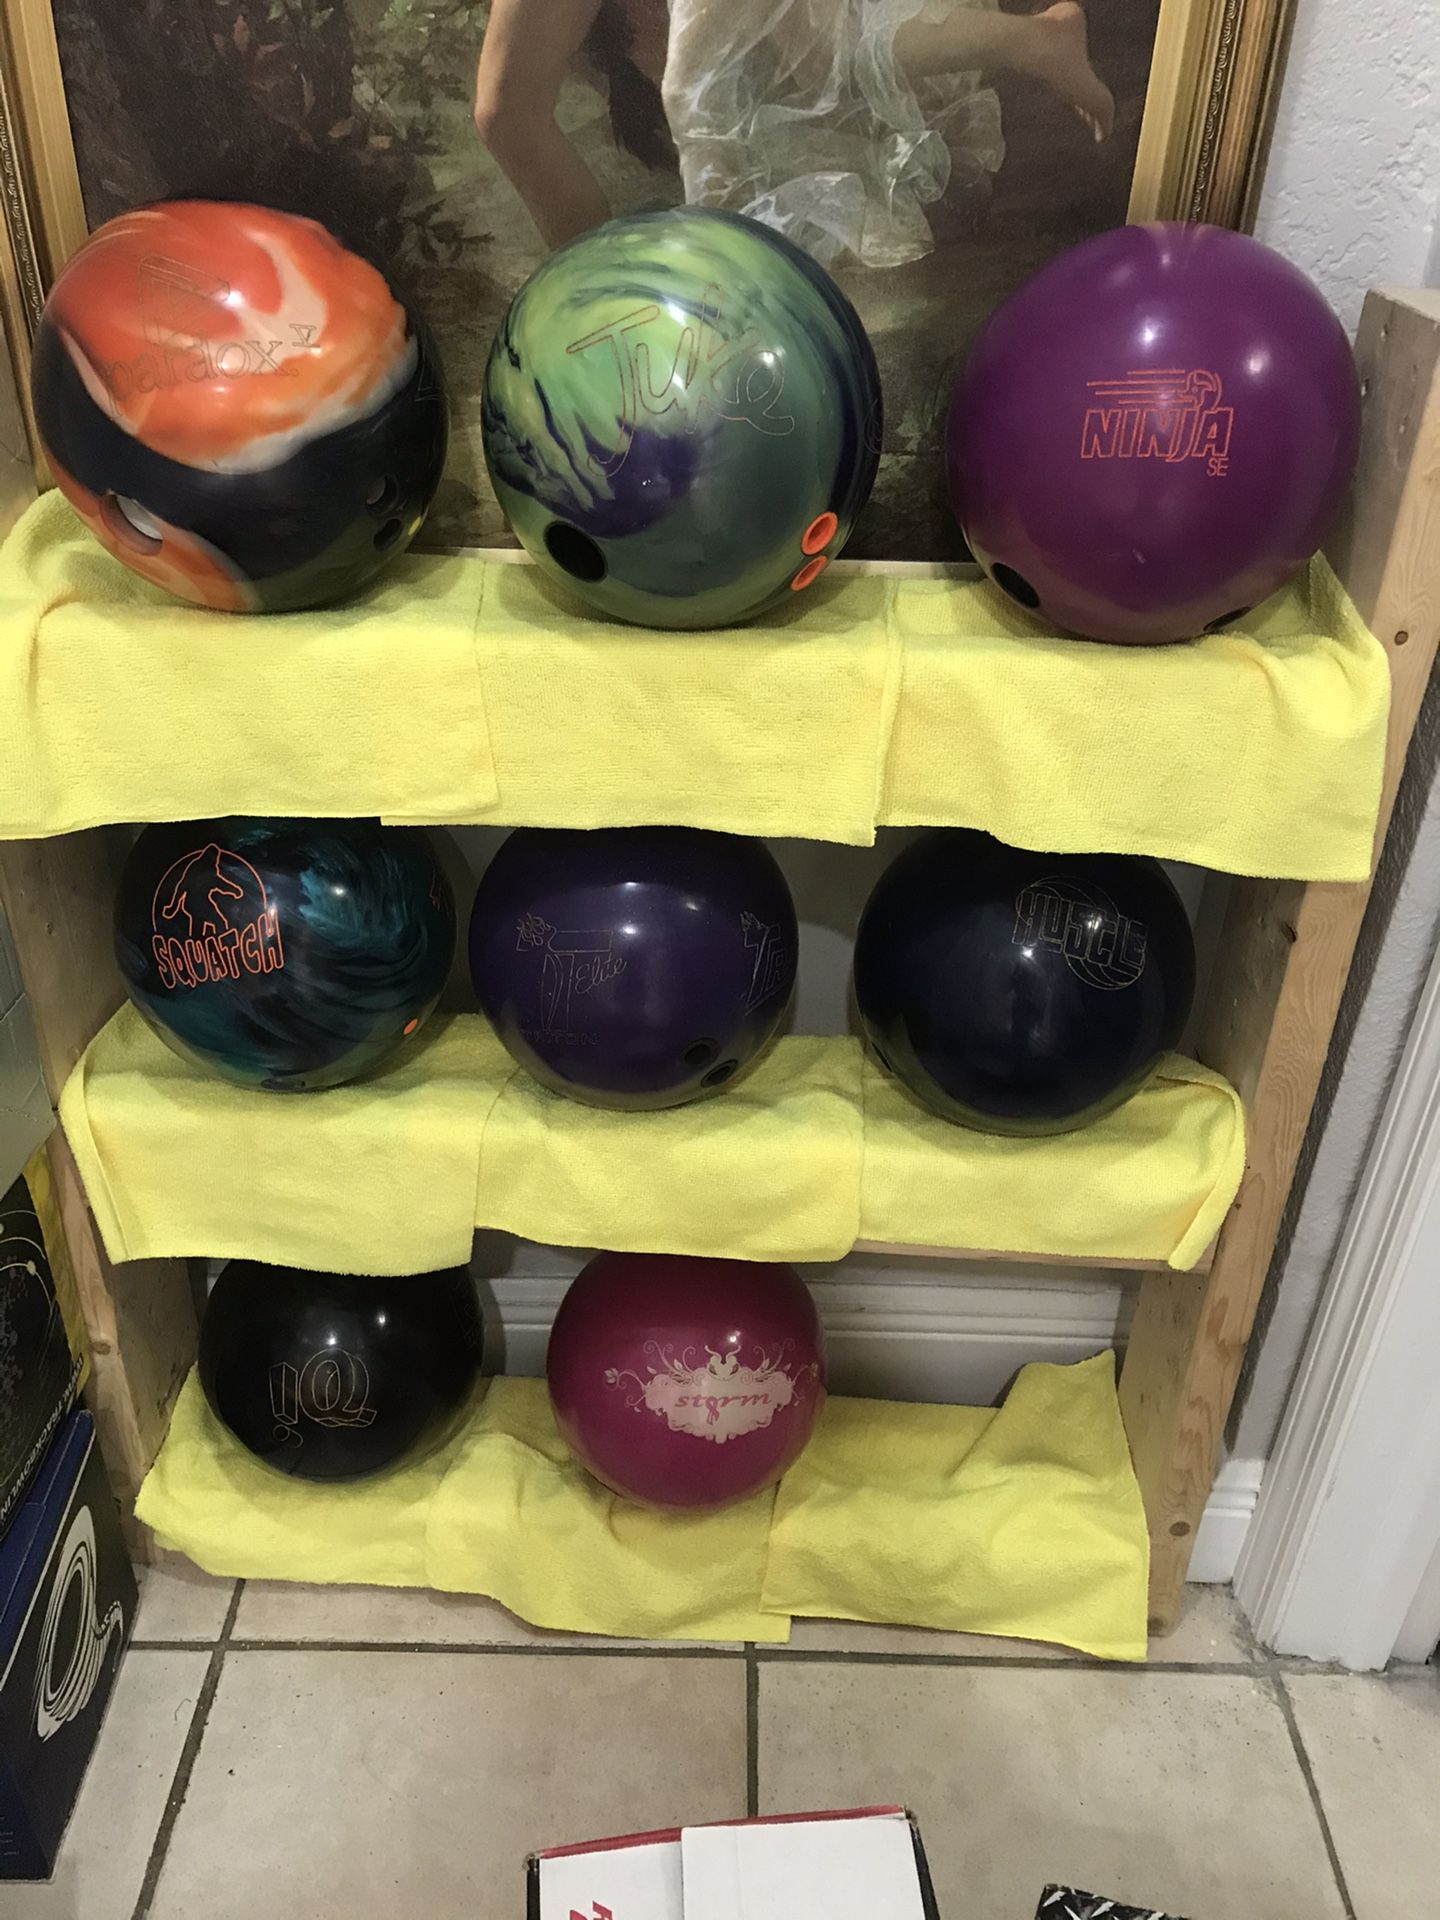 15lb bowling balls for sale